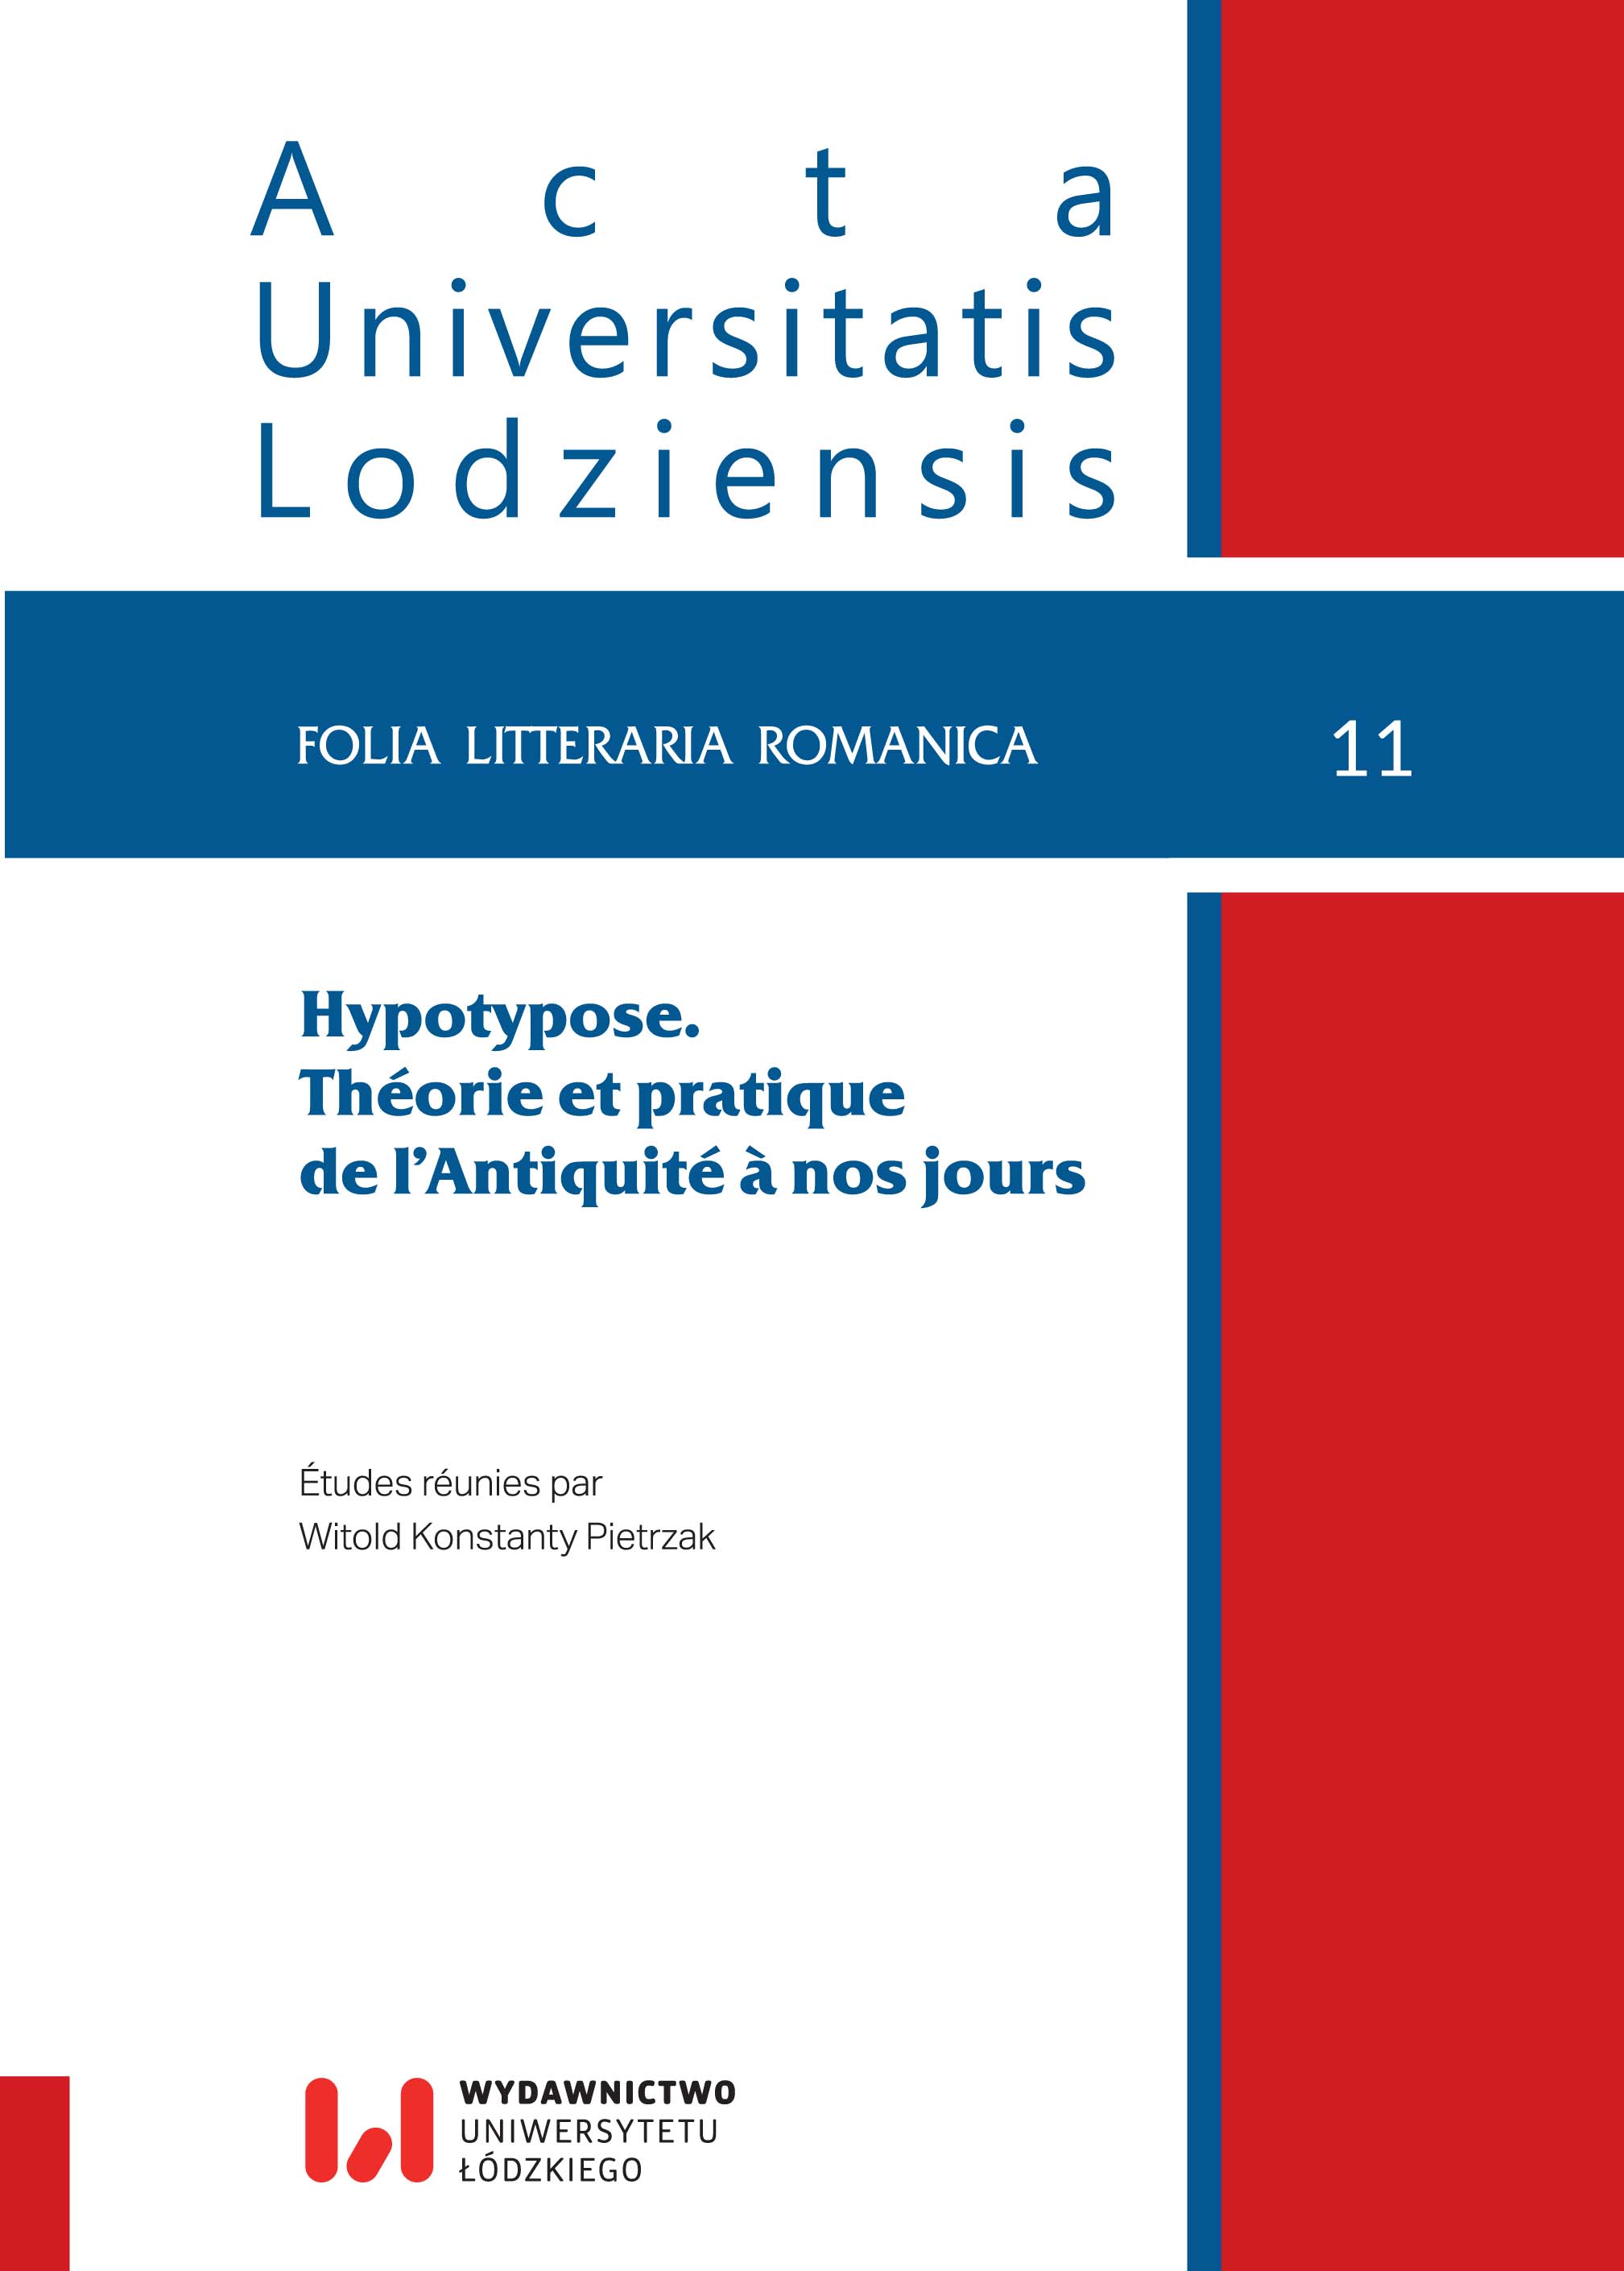 Hypotyposis of Envie in Ovide moralisé in Verses Cover Image